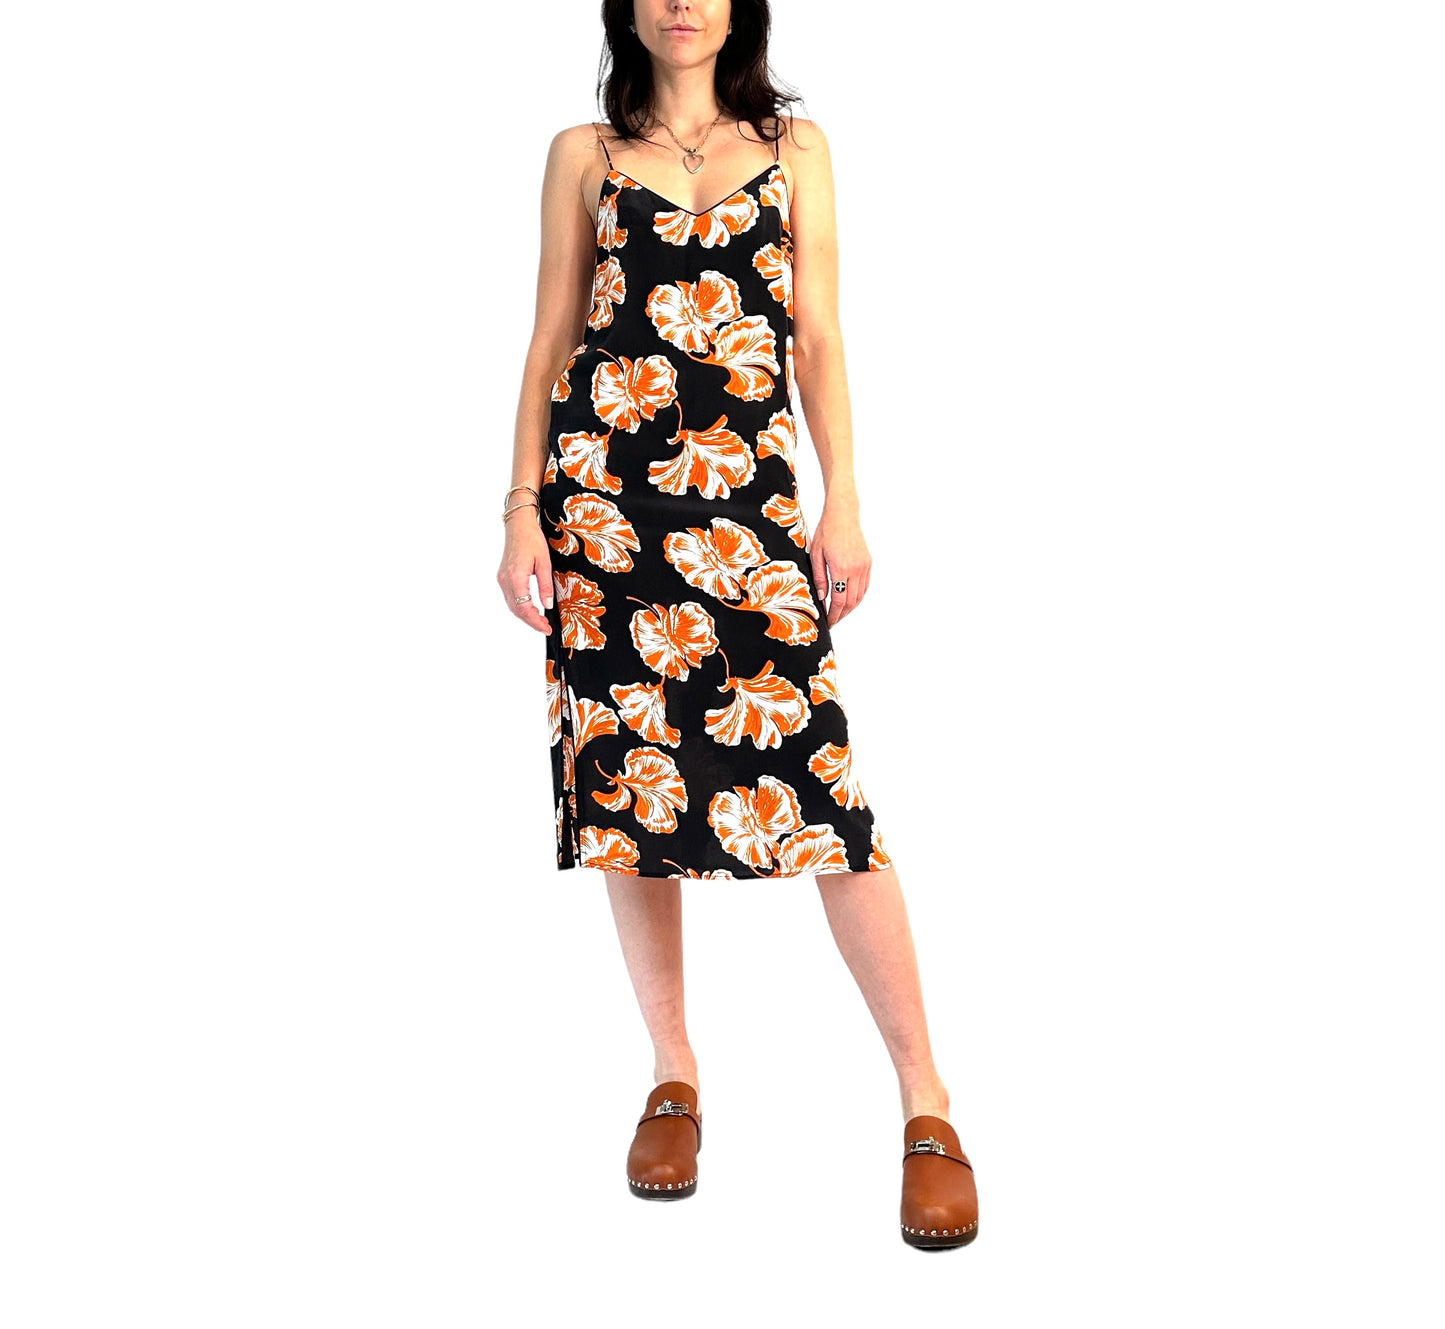 Black & Orange Print Slip-On Dress - S